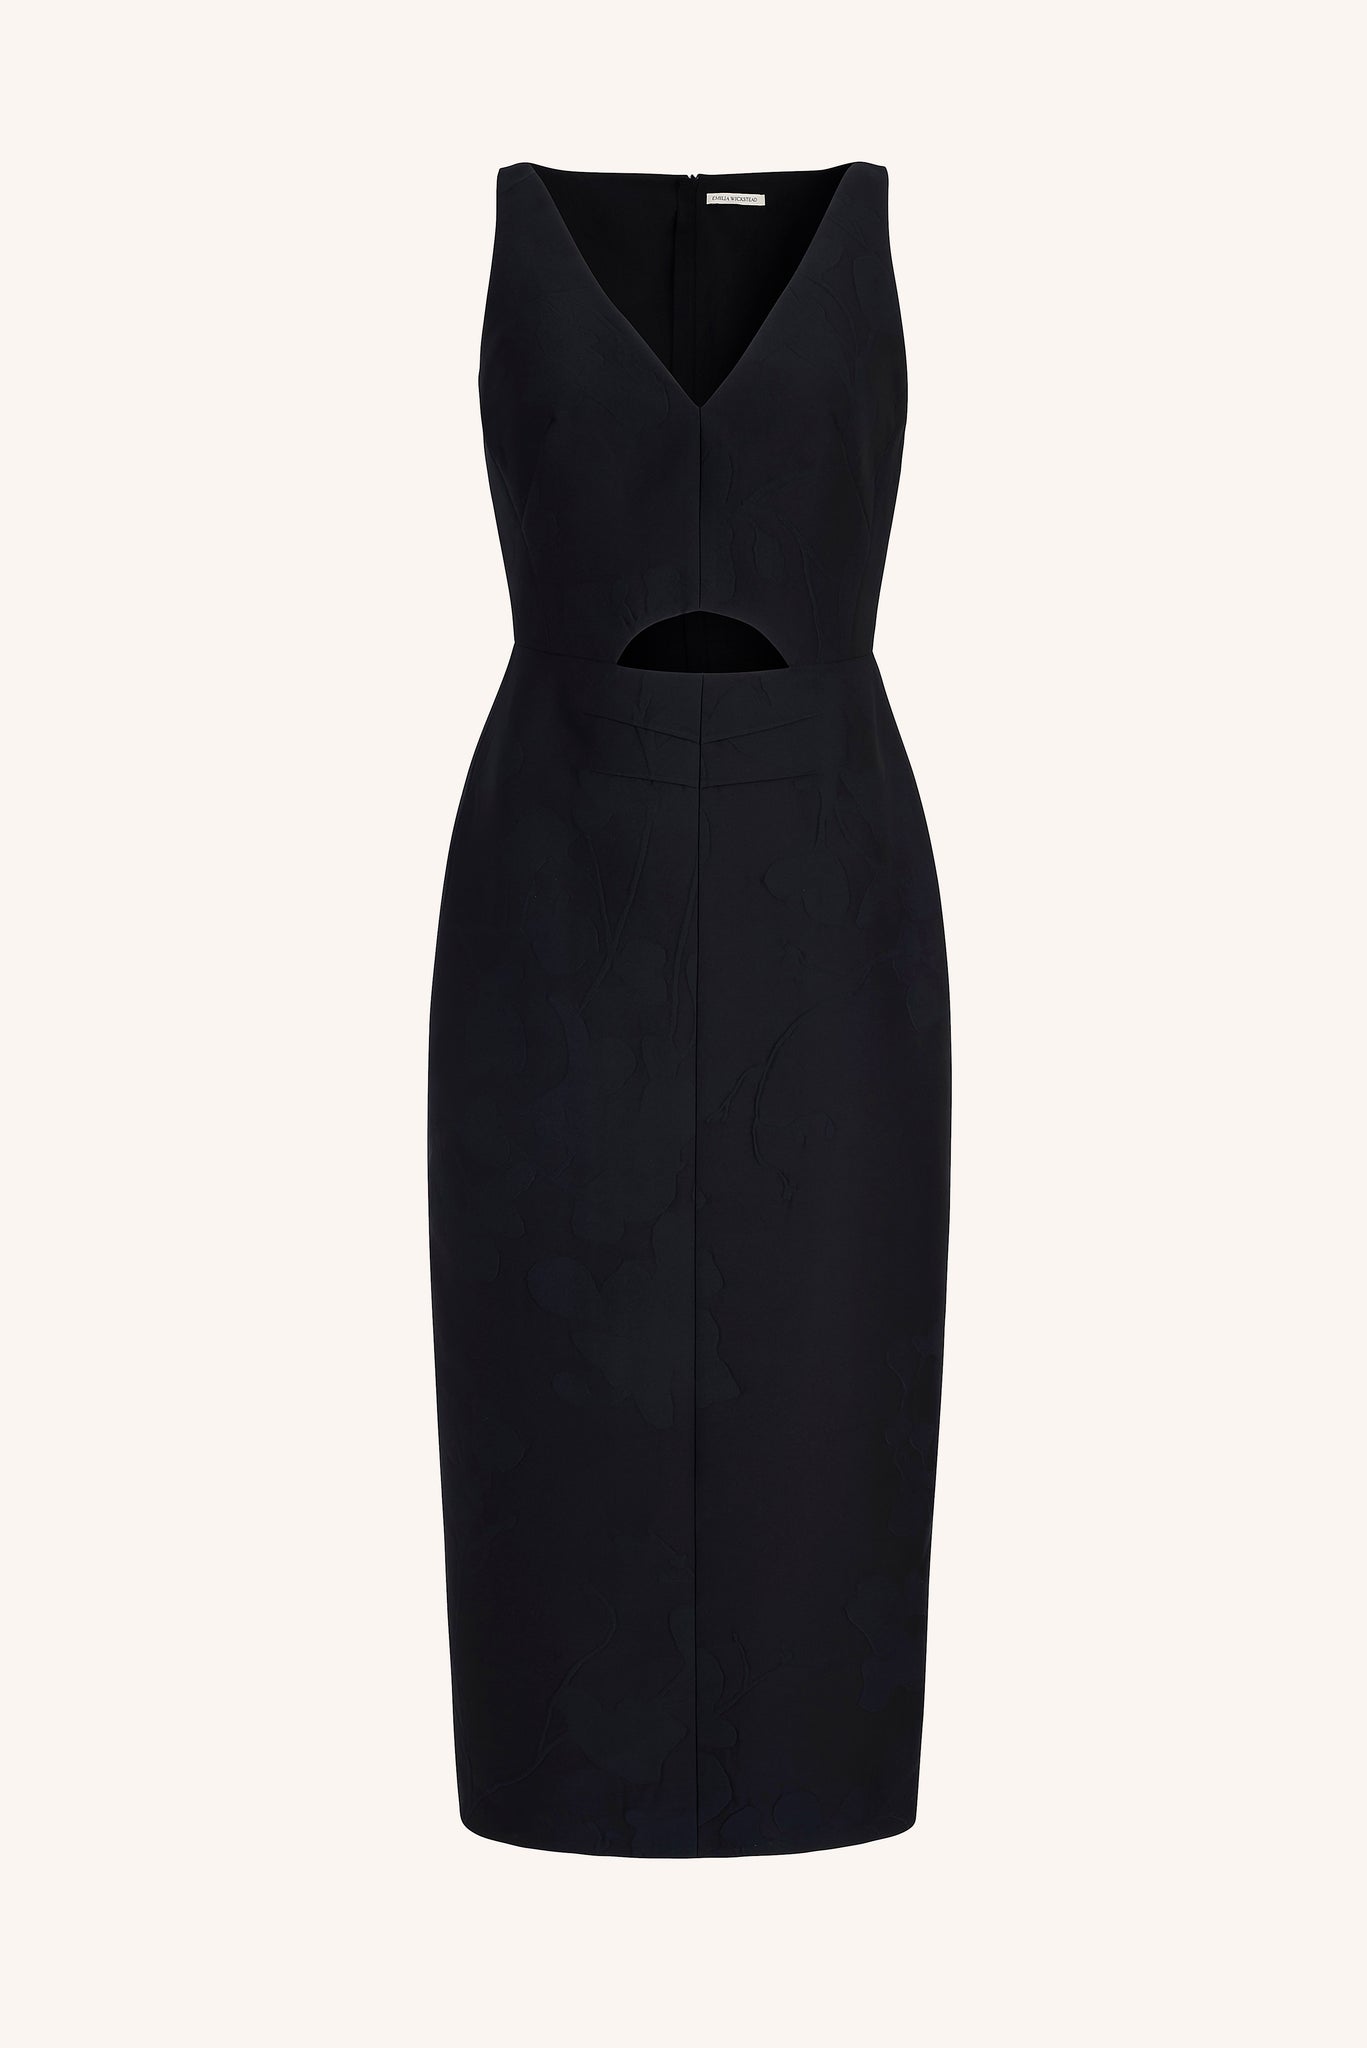 Ilyse Dress In Black Embossed Cloque | Emilia Wickstead